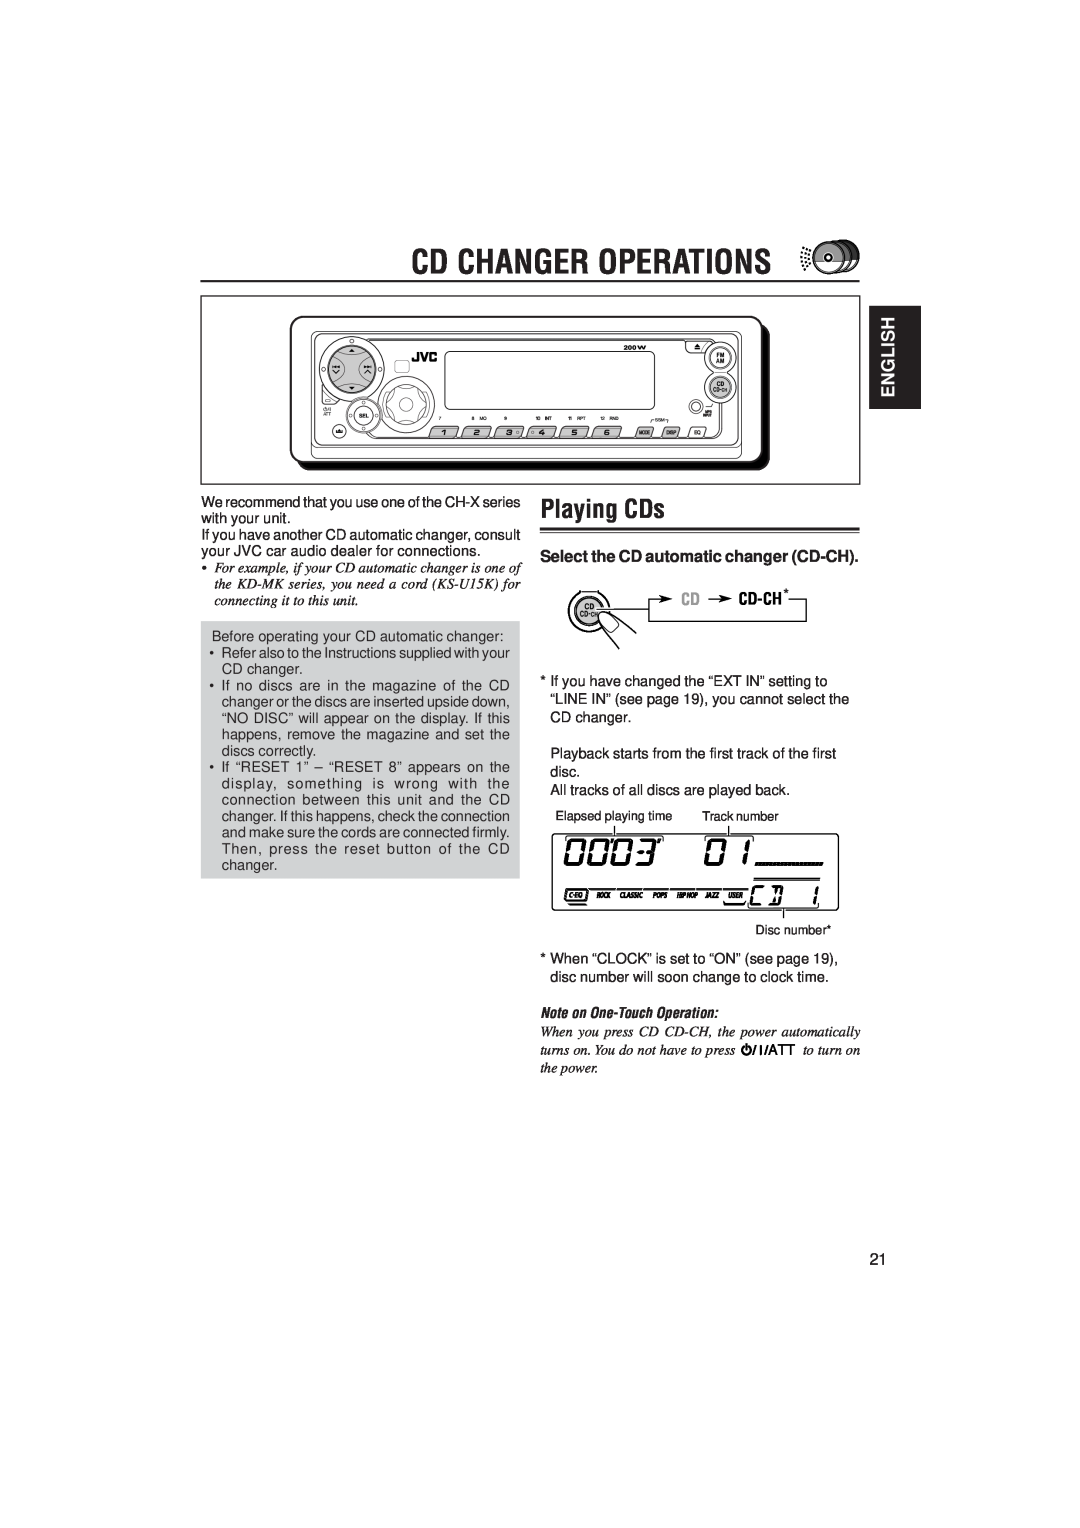 JVC KD-SX780, KD-SX8250 manual Cd Changer Operations, Playing CDs, Select the CD automatic changer CD-CH CD CD-CH, English 